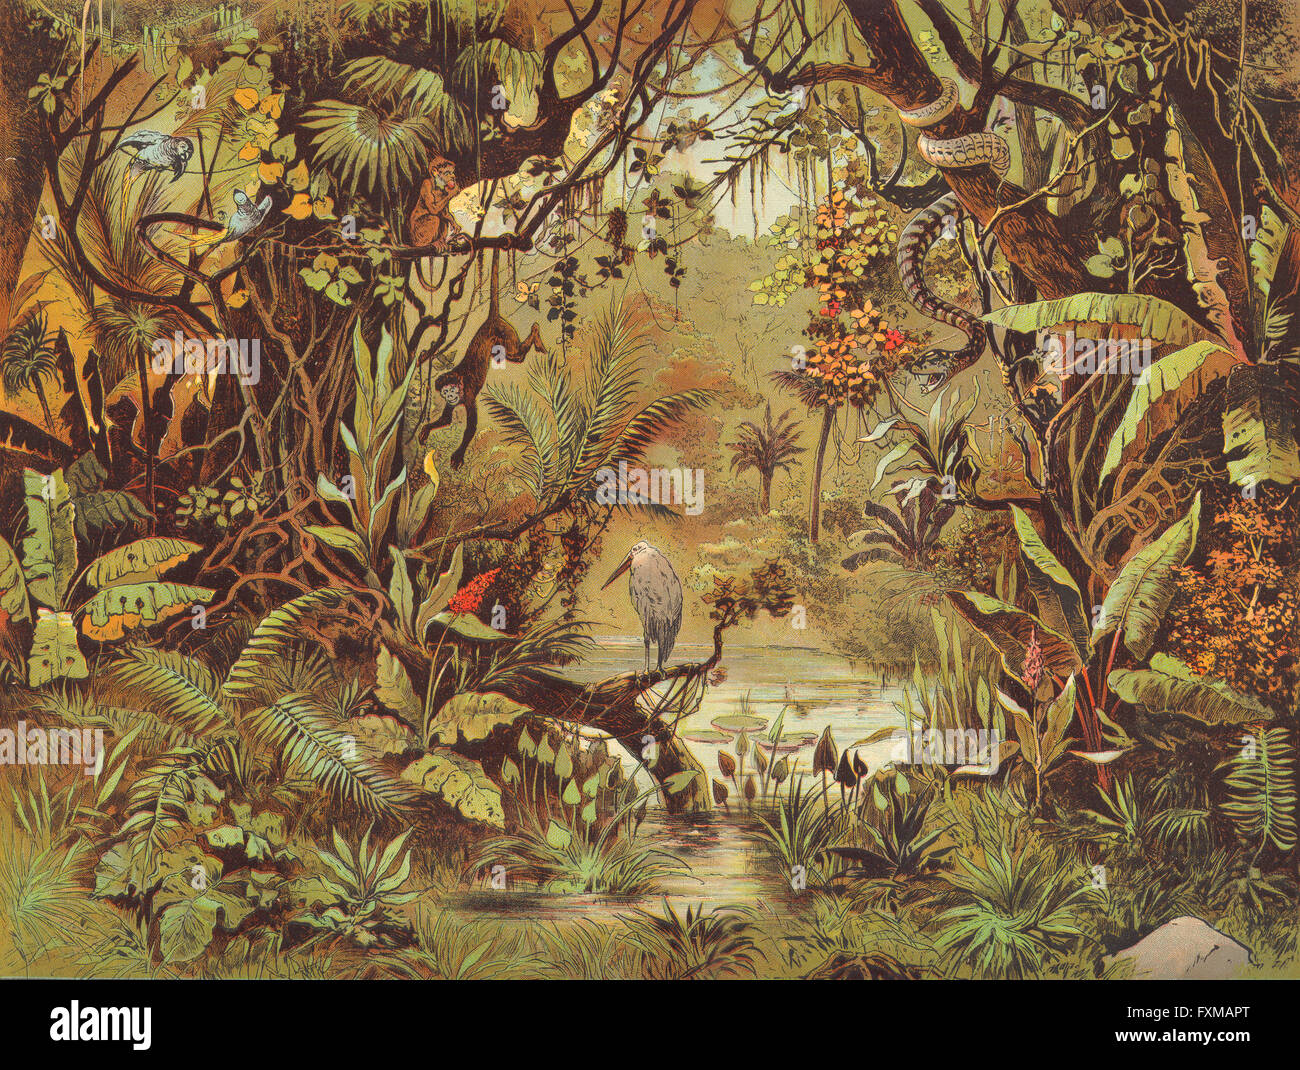 BRAZIL: Brasilianische Urwald: Walther jungle, antique print 1880 Stock Photo